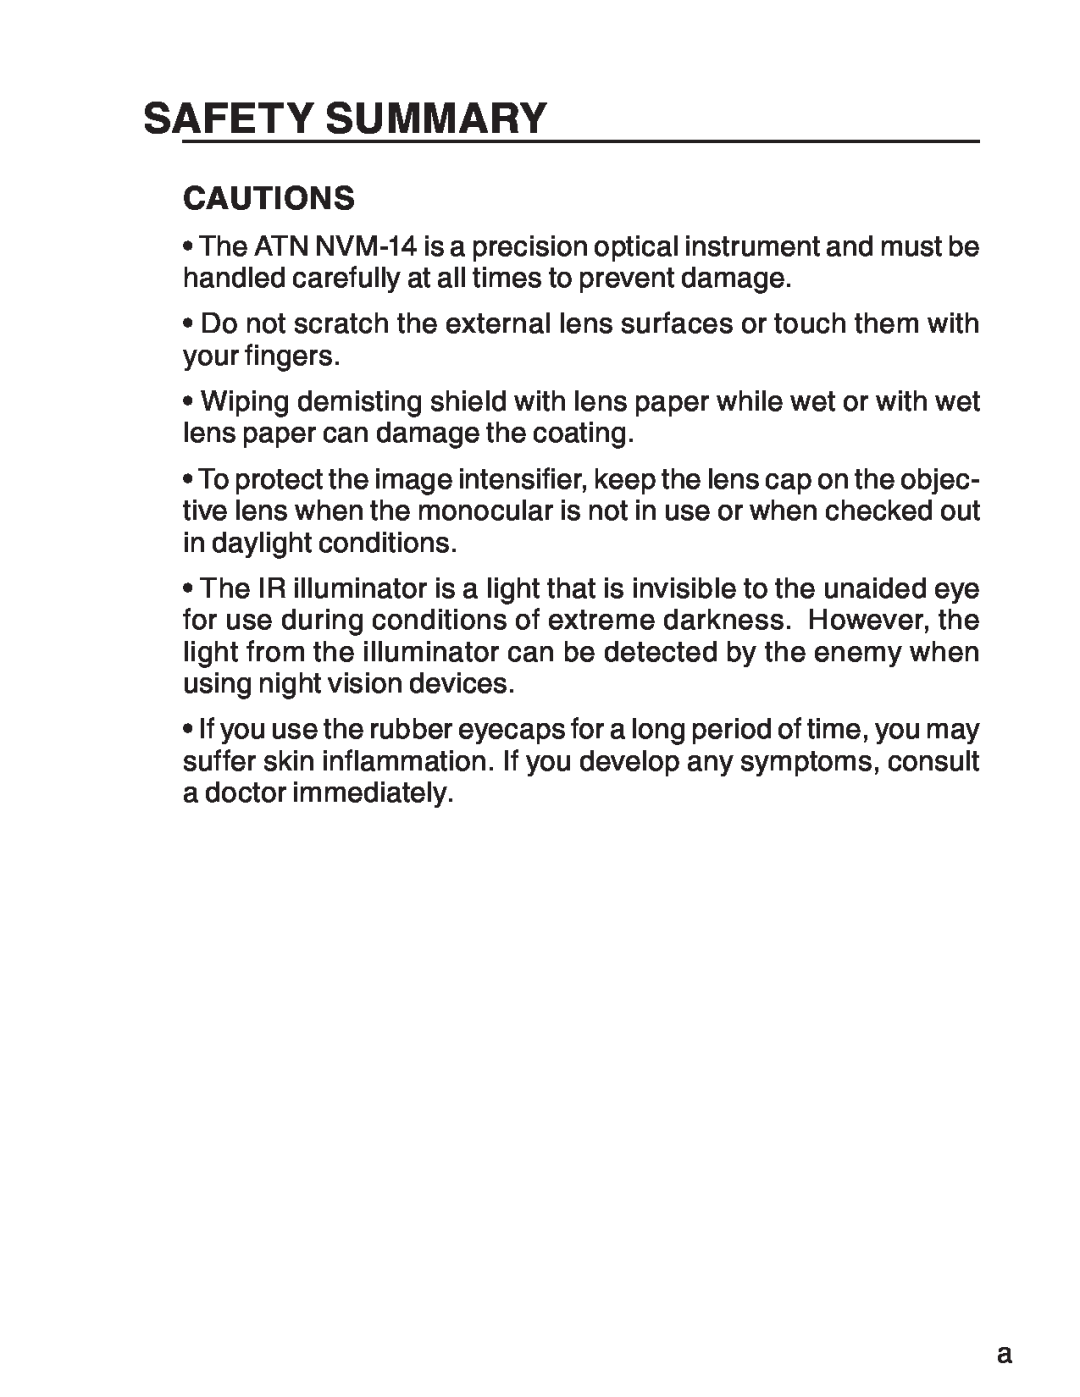 ATN 3 manual Safety Summary, Cautions 